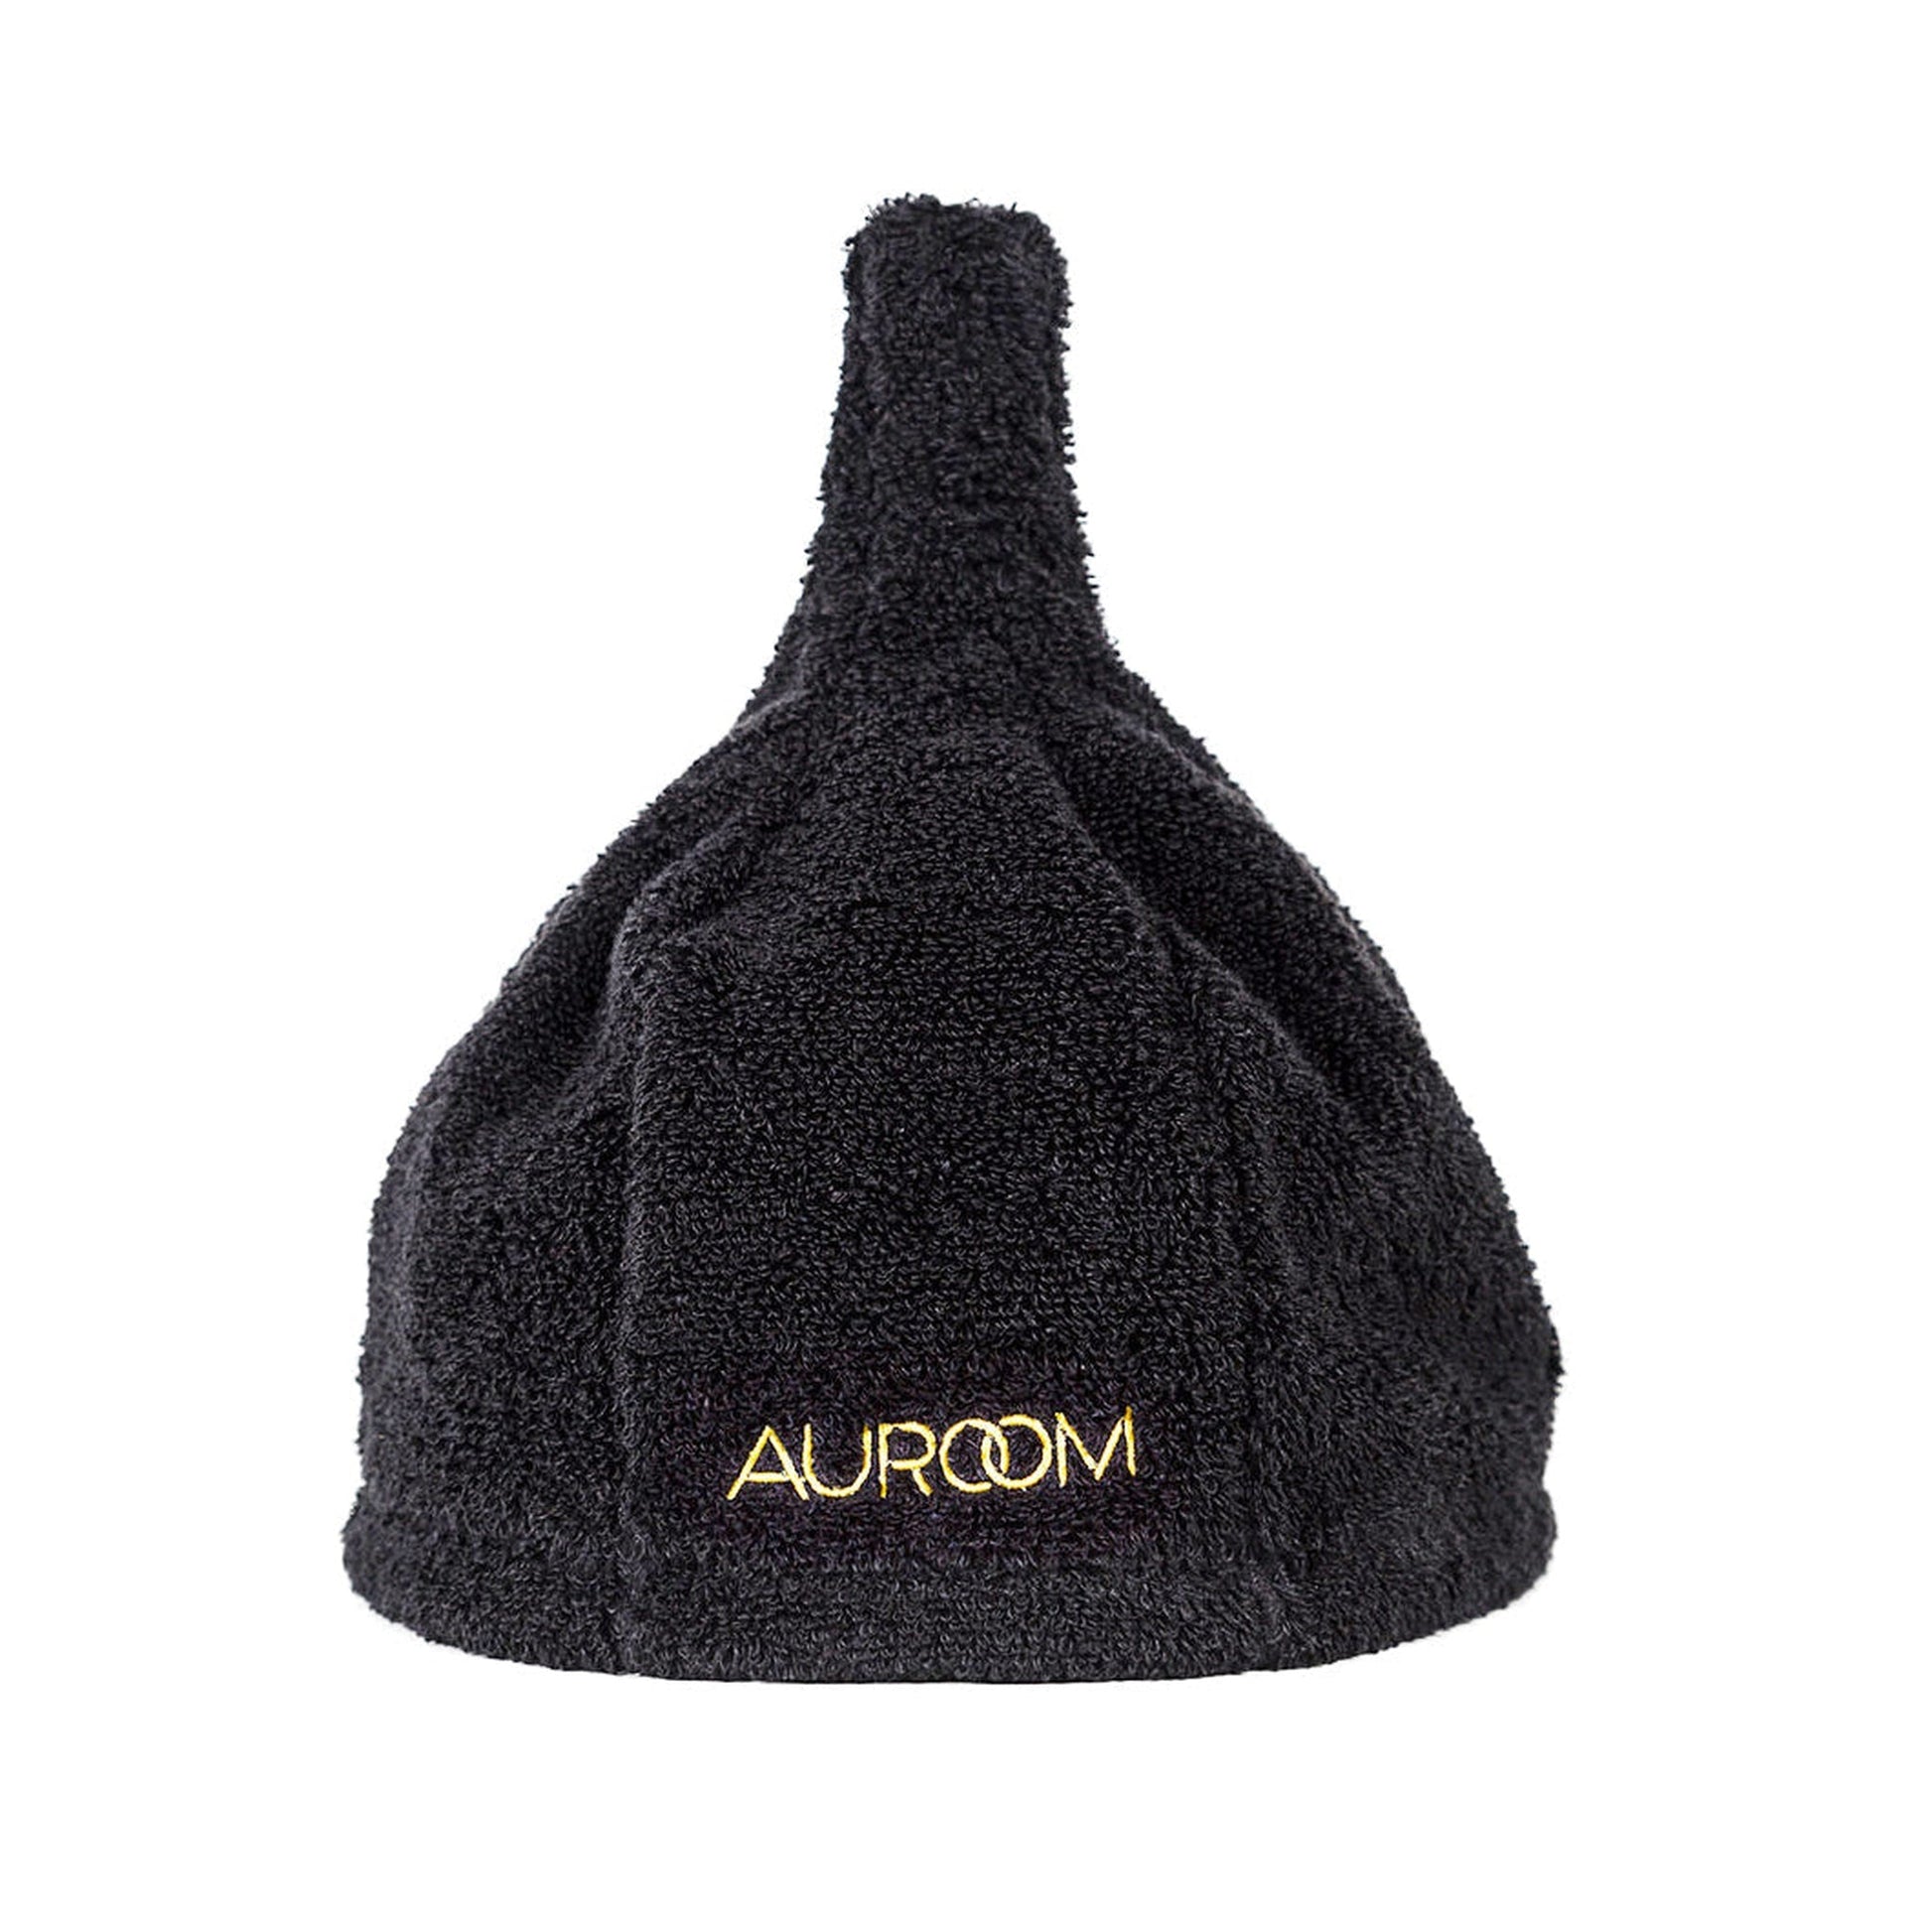 Auroom Sauna Accessory Black Natural Linen & Cotton Blend Sauna Hat Pipe